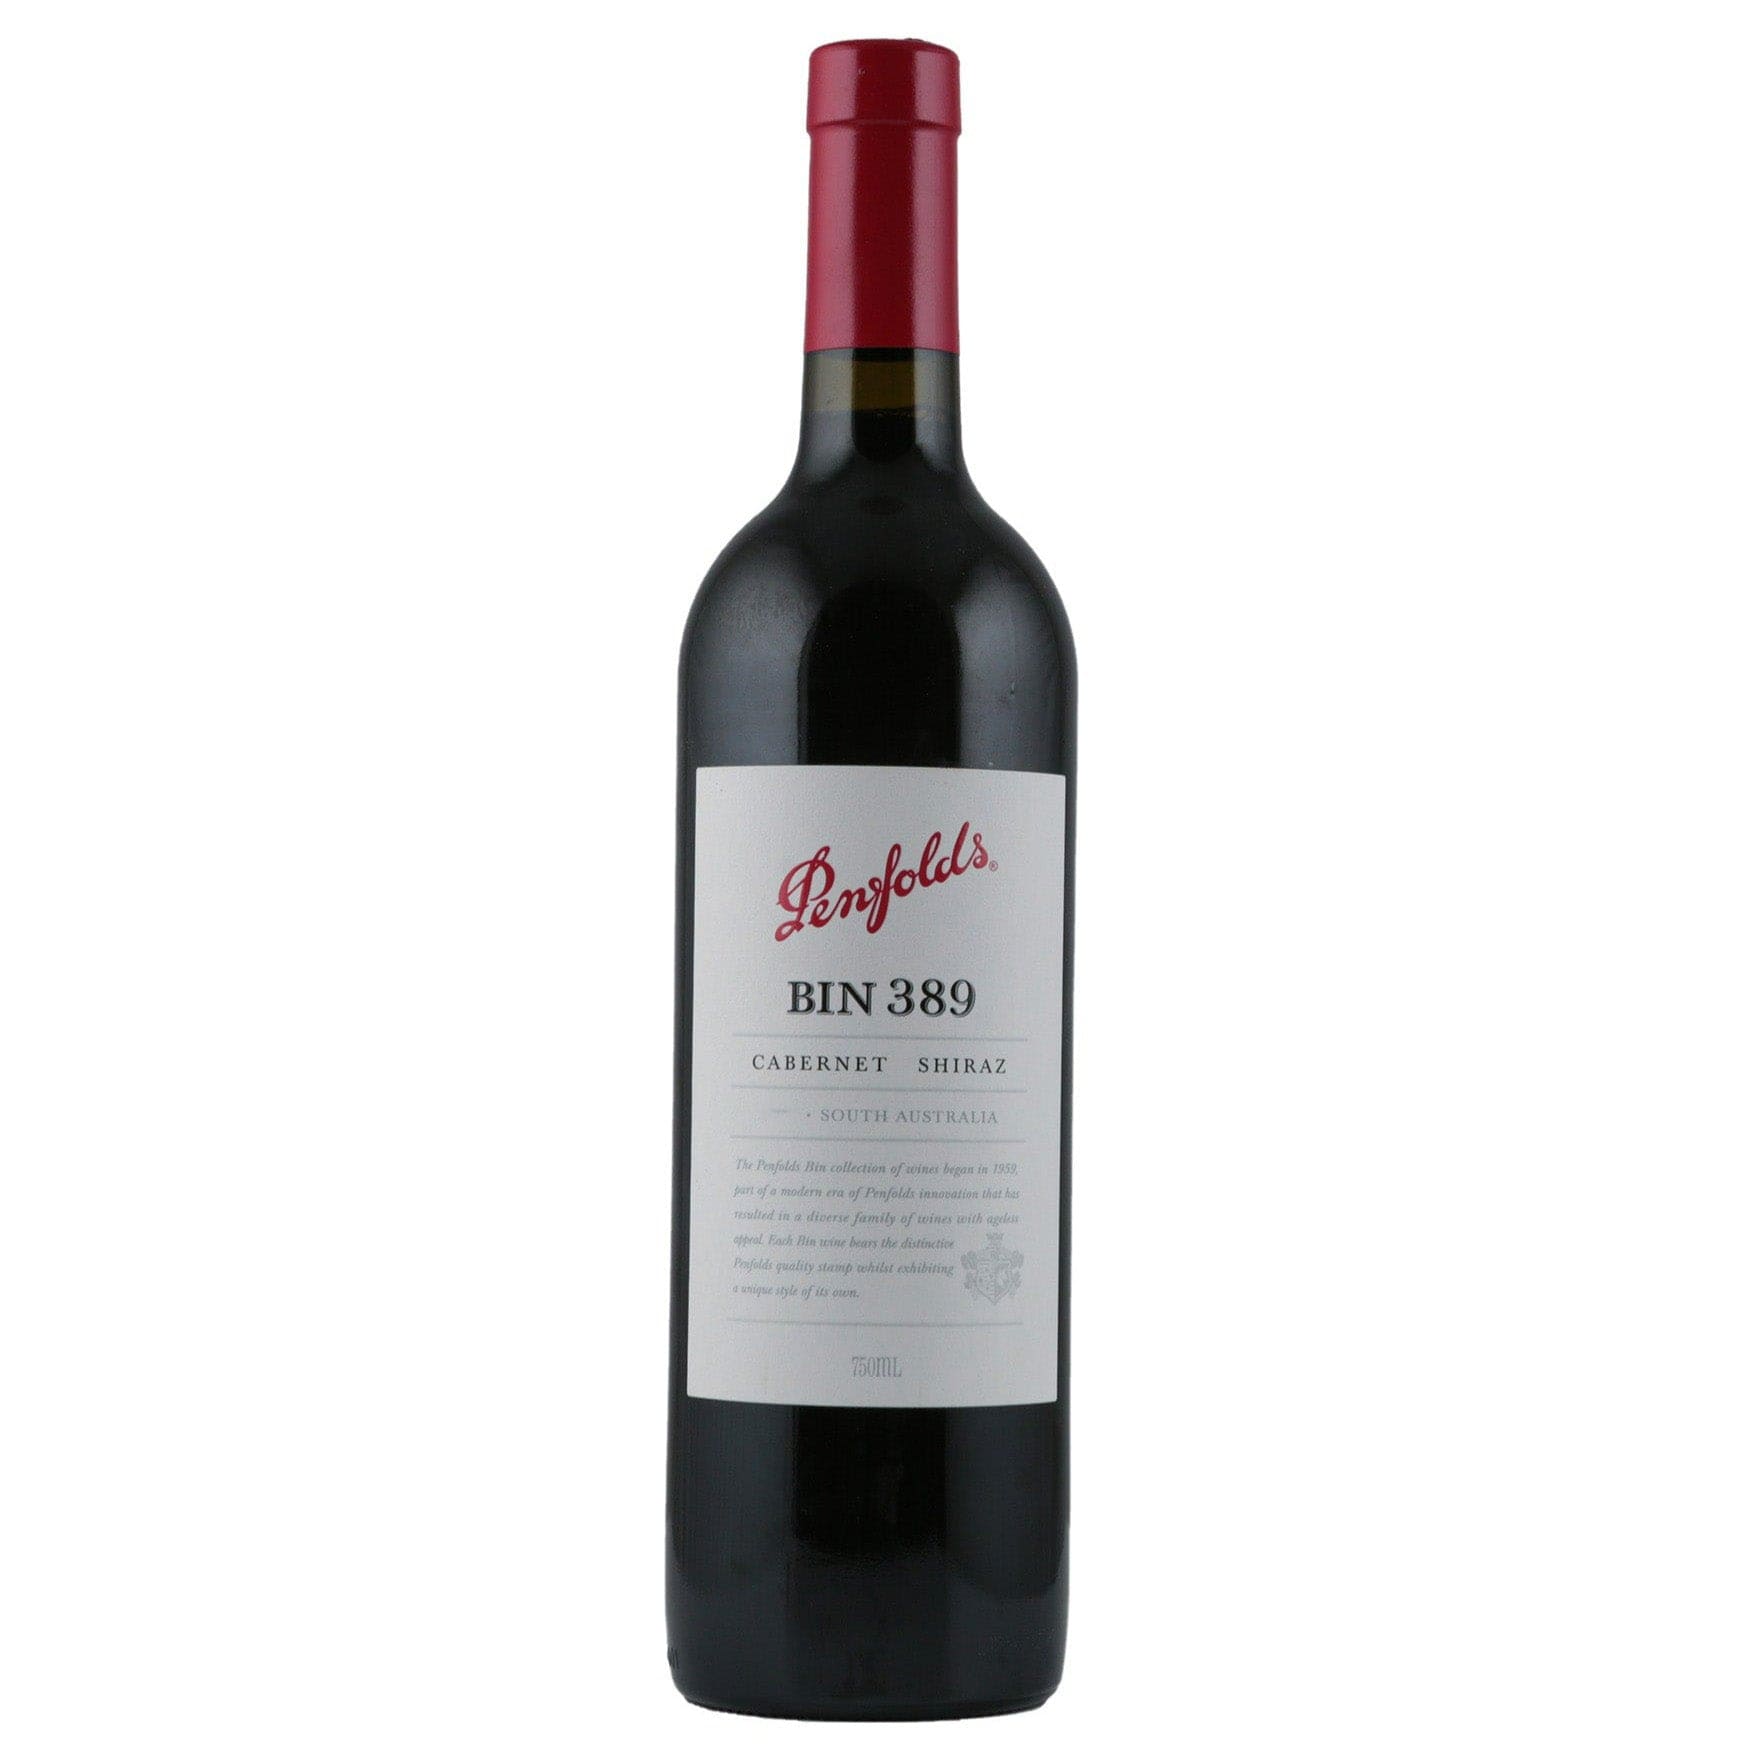 Single bottle of Red wine Penfolds, Bin 389 Cabernet Shiraz, South Australia, 2006 52% Cabernet Sauvignon & 48% Shiraz